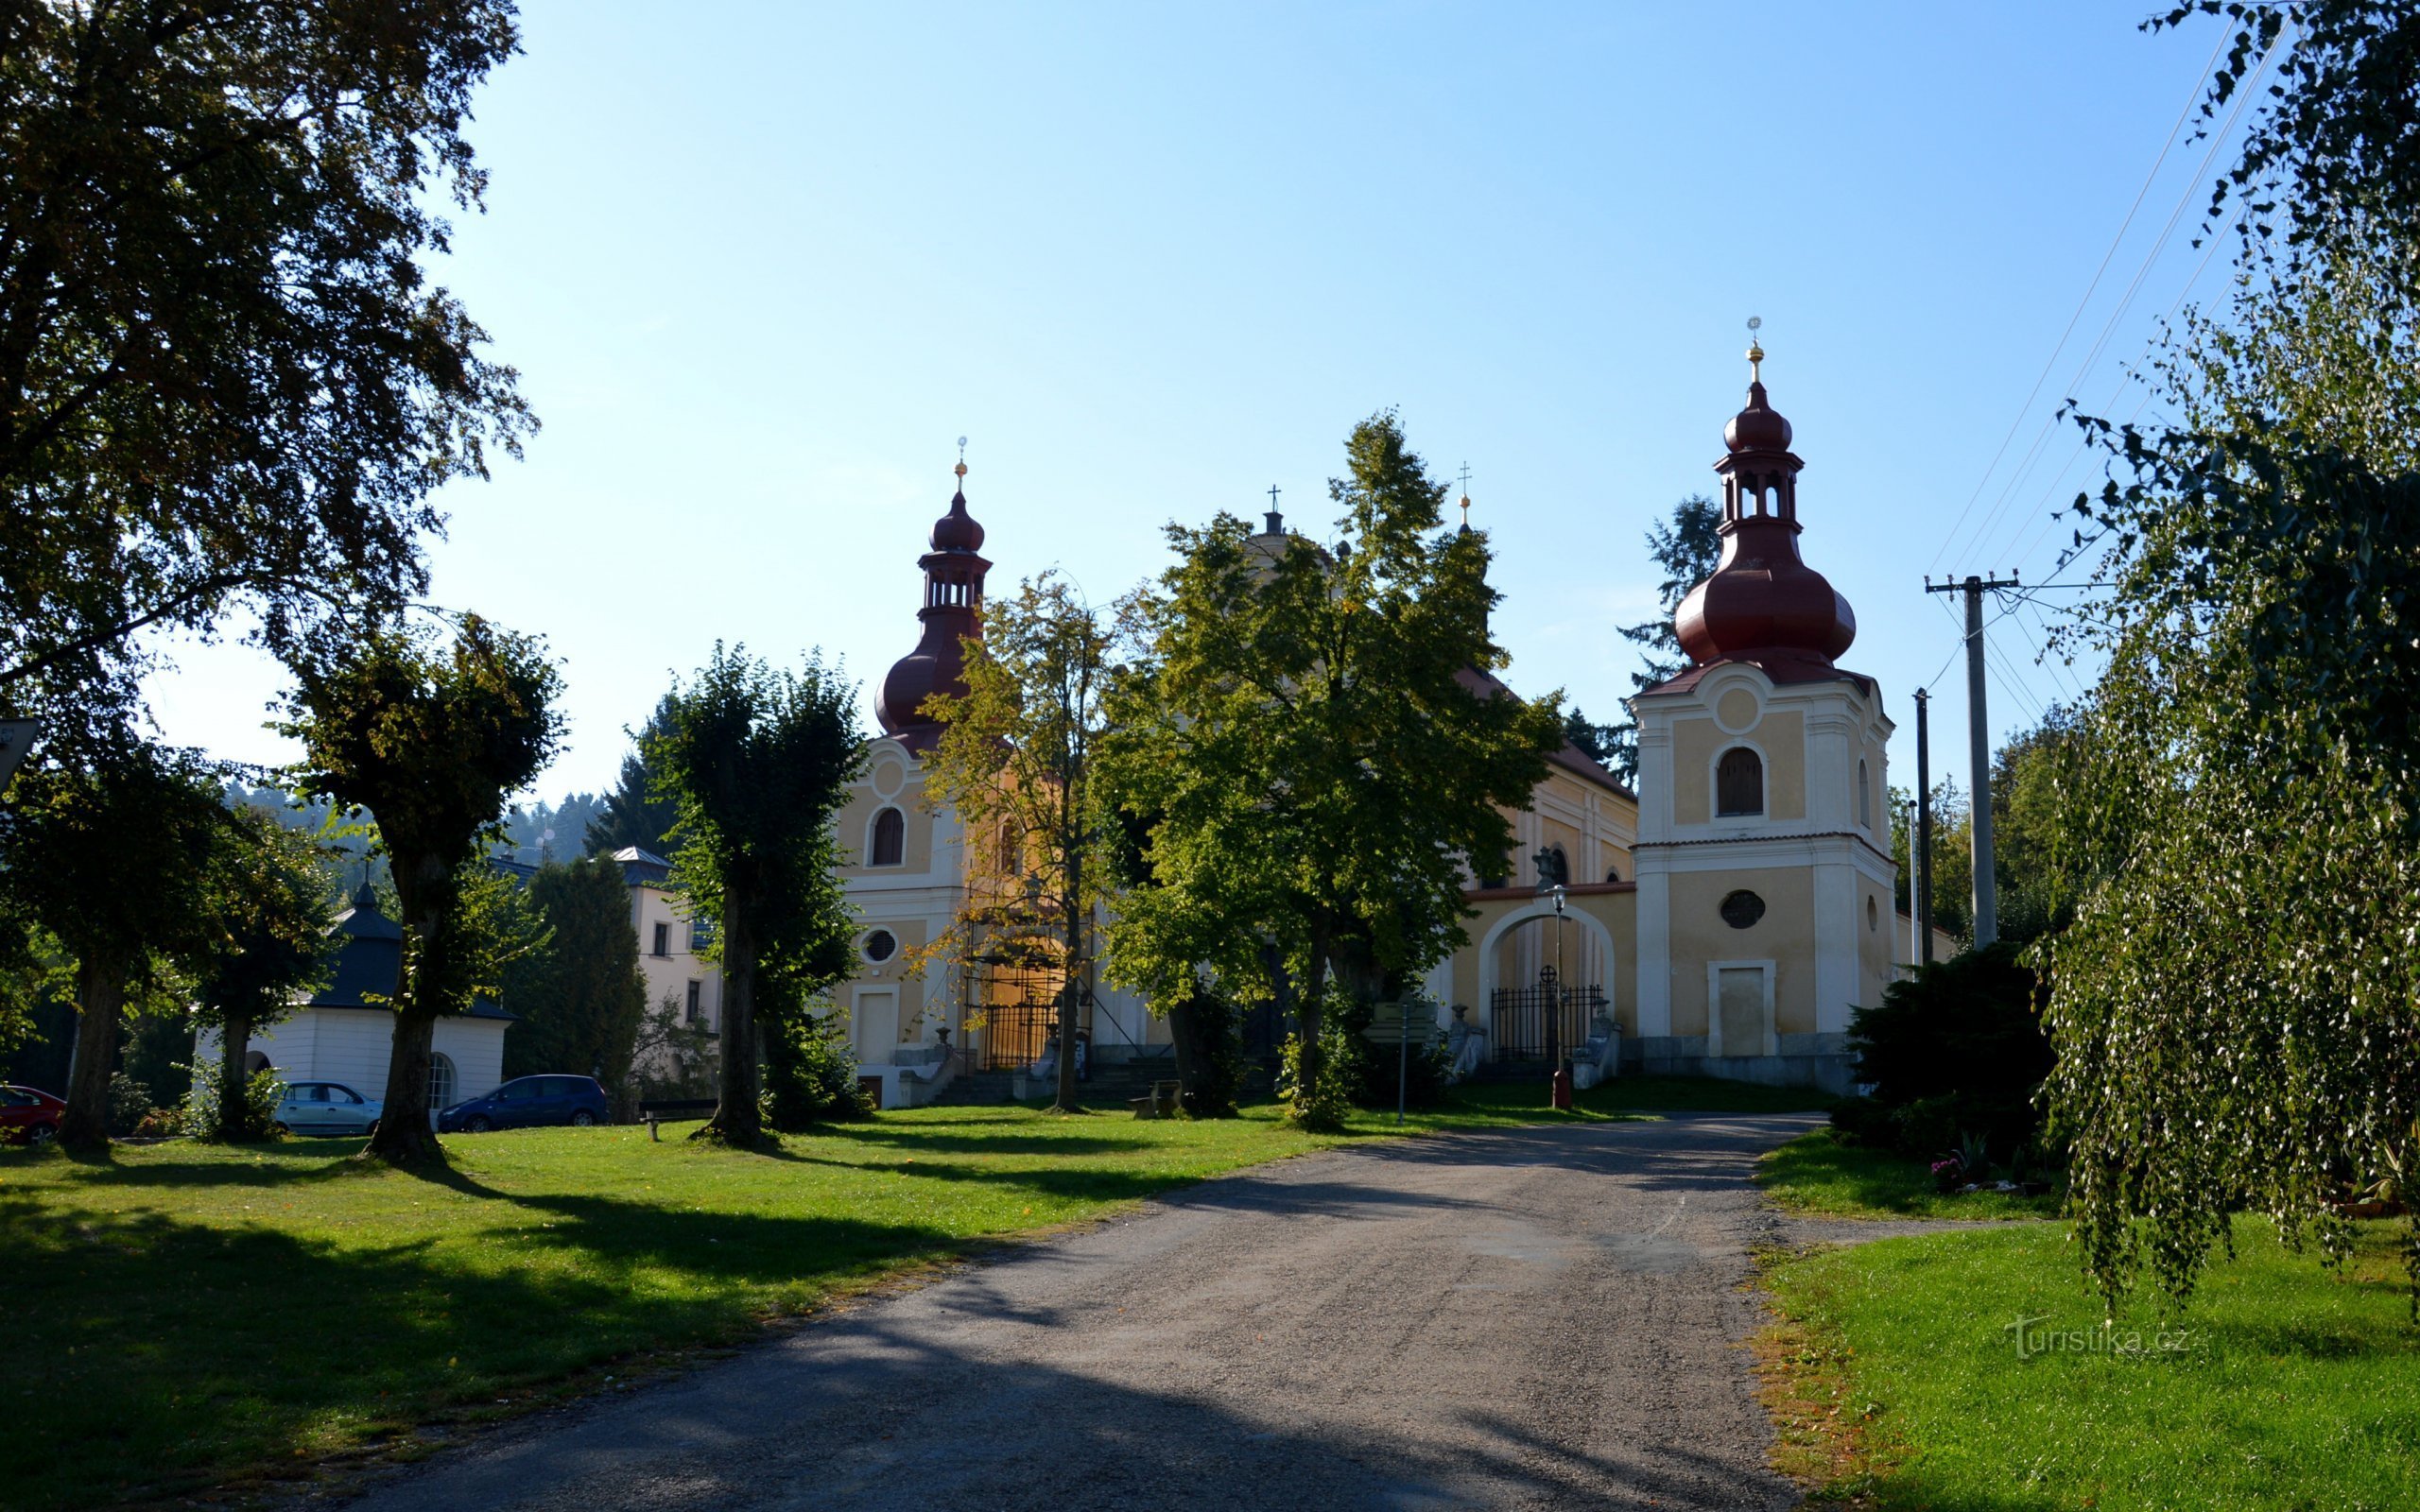 Sudějov - torg med kyrkan St. Anne